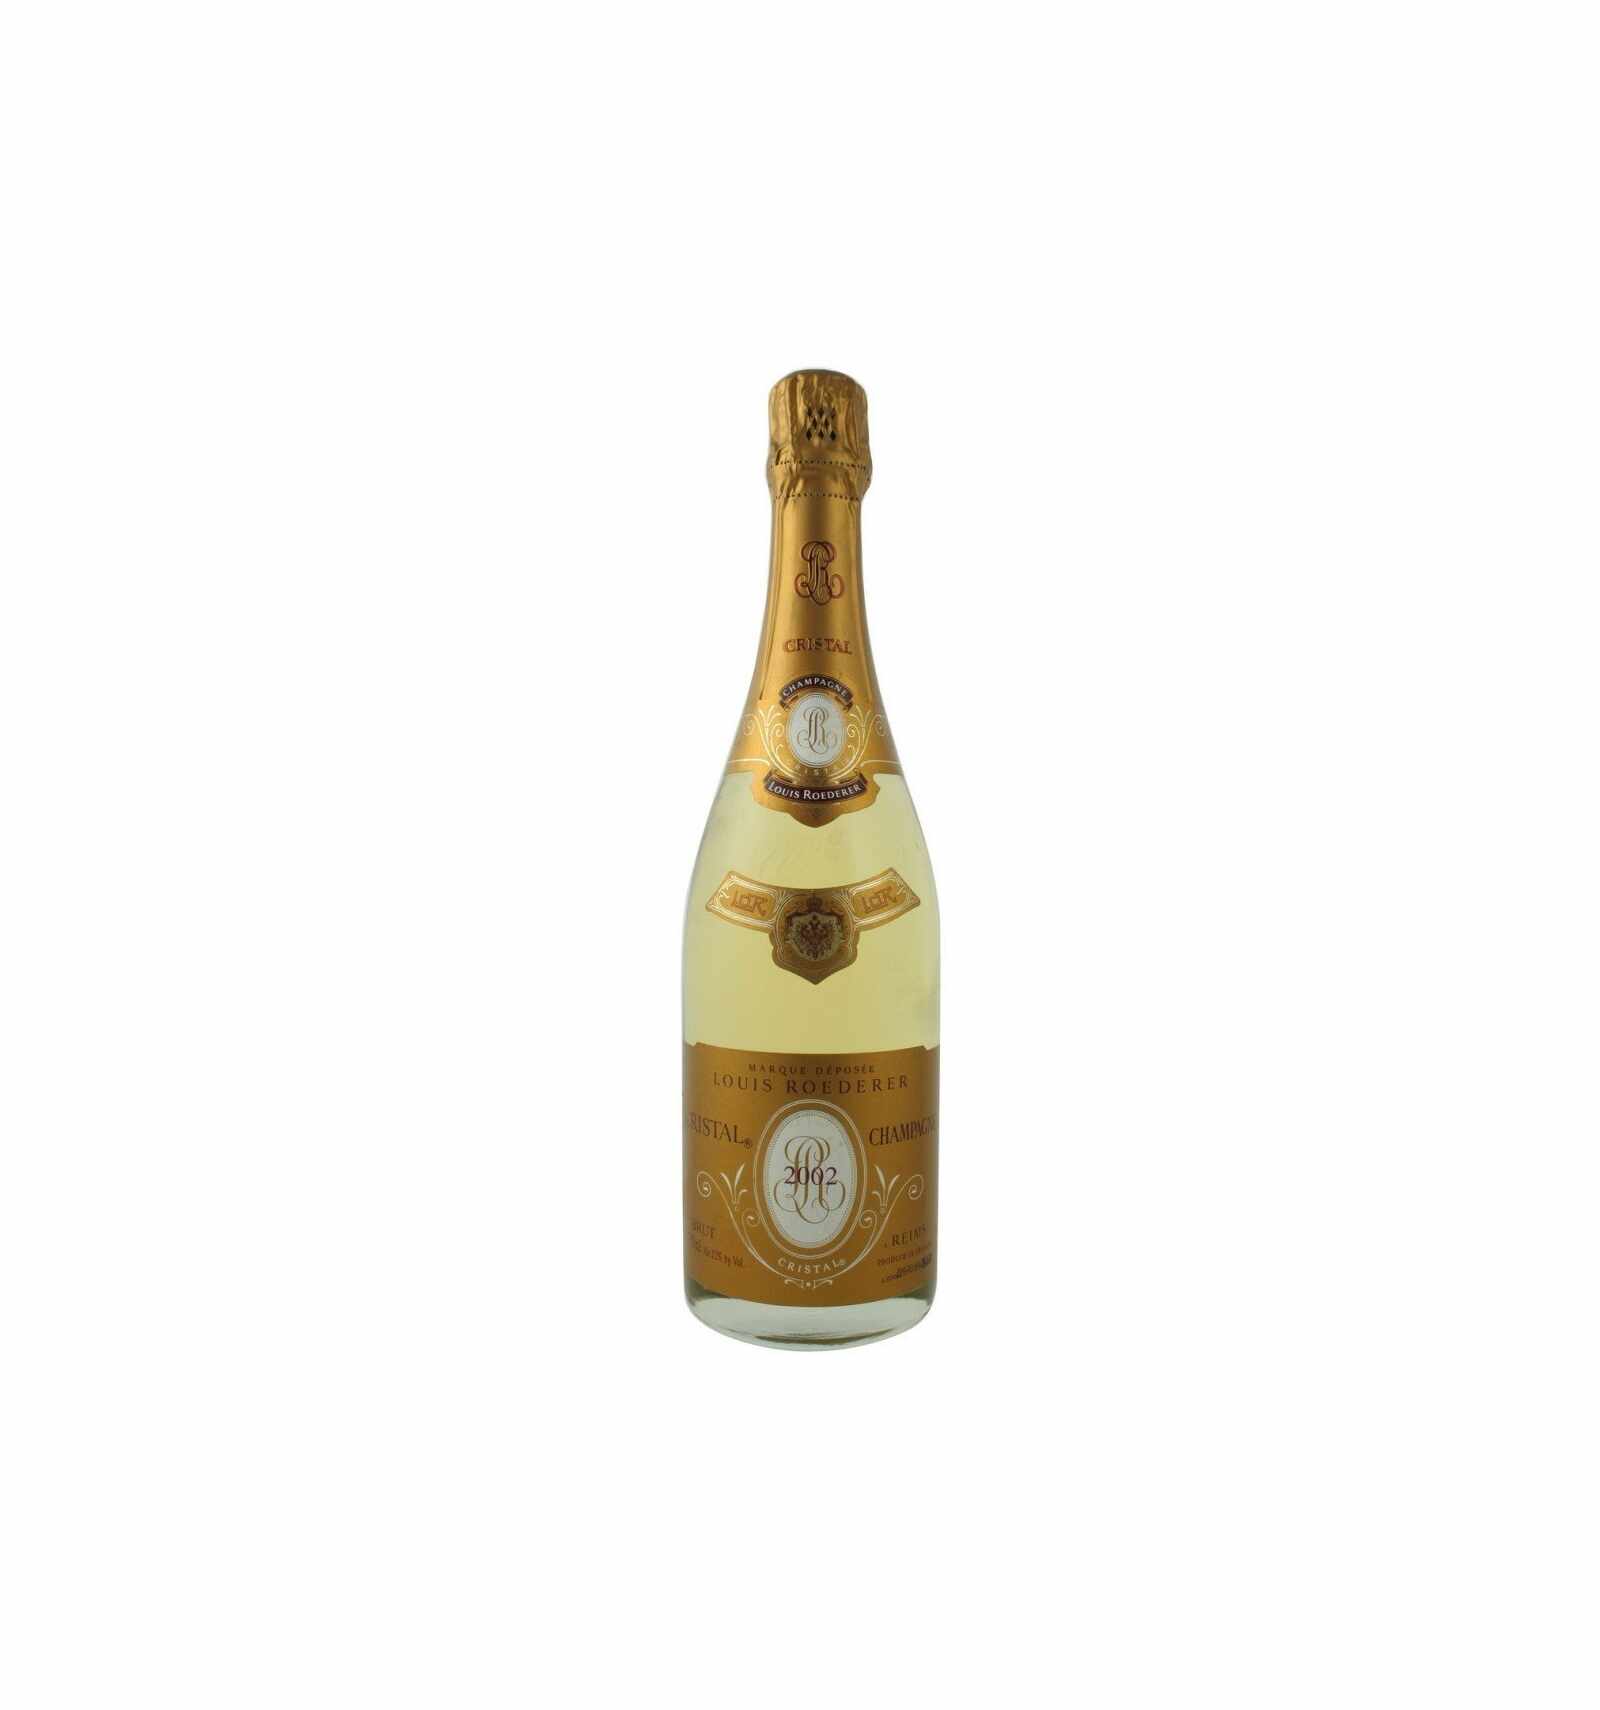 Sampanie, Louis Roederer Cristal Champagne, 0.75L, 12% alc., Franta